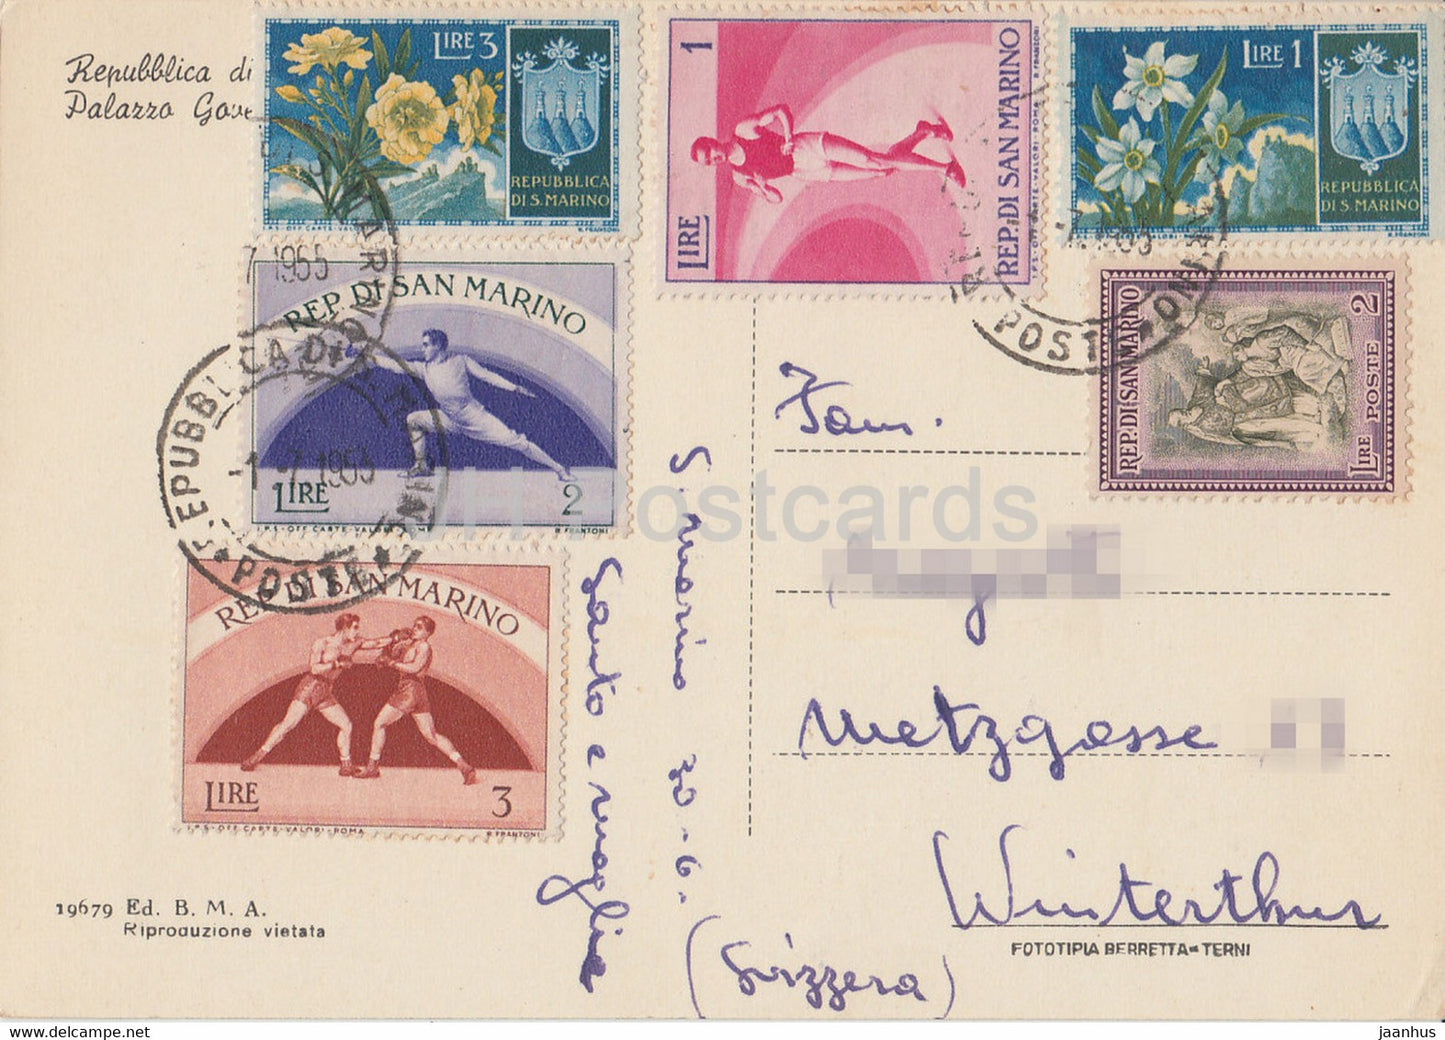 Repubblica di San Marino - Palazzo - carte postale ancienne - 1955 - Saint-Marin - utilisé